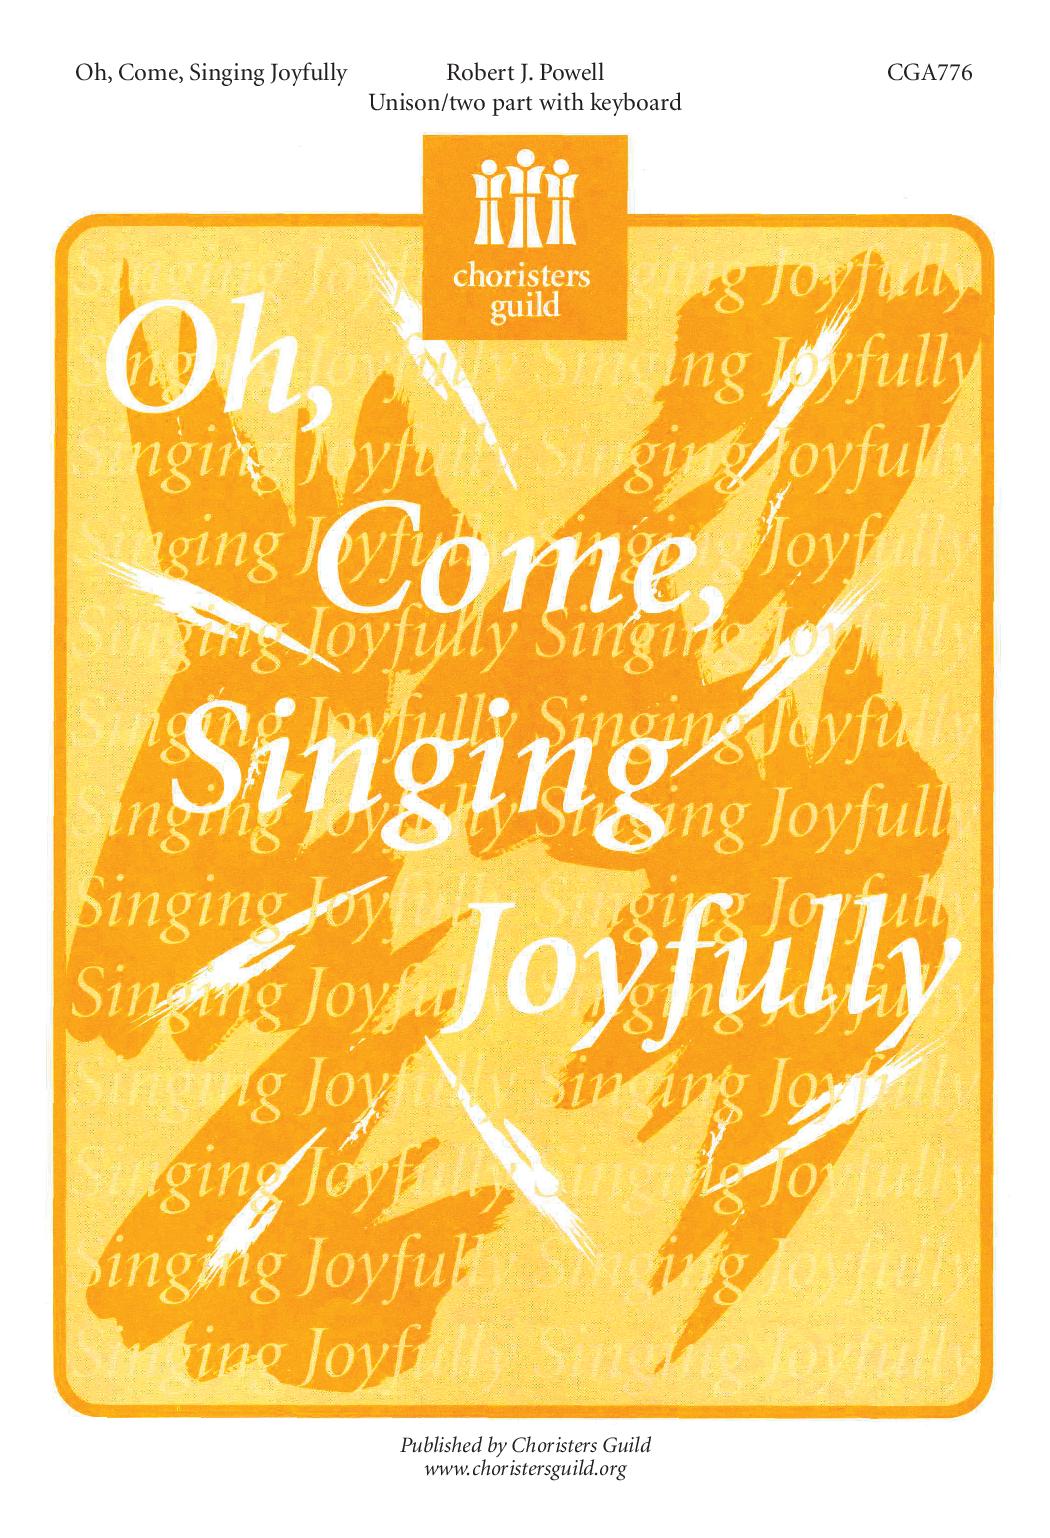 Oh, Come, Singing Joyfully